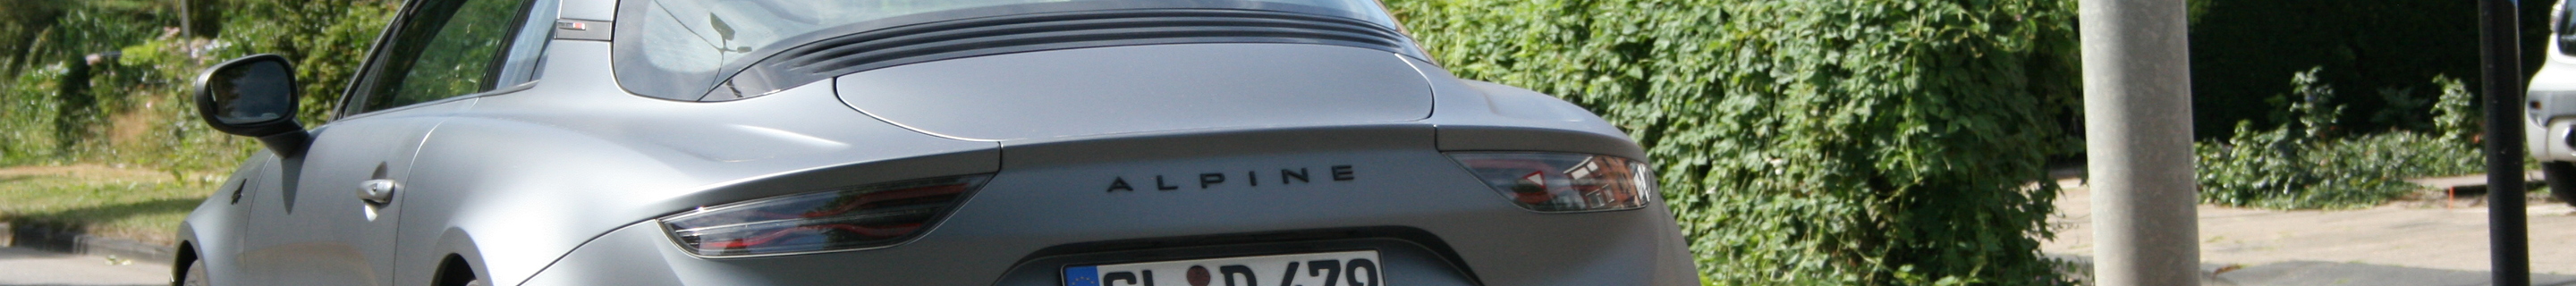 Alpine A110 Légende